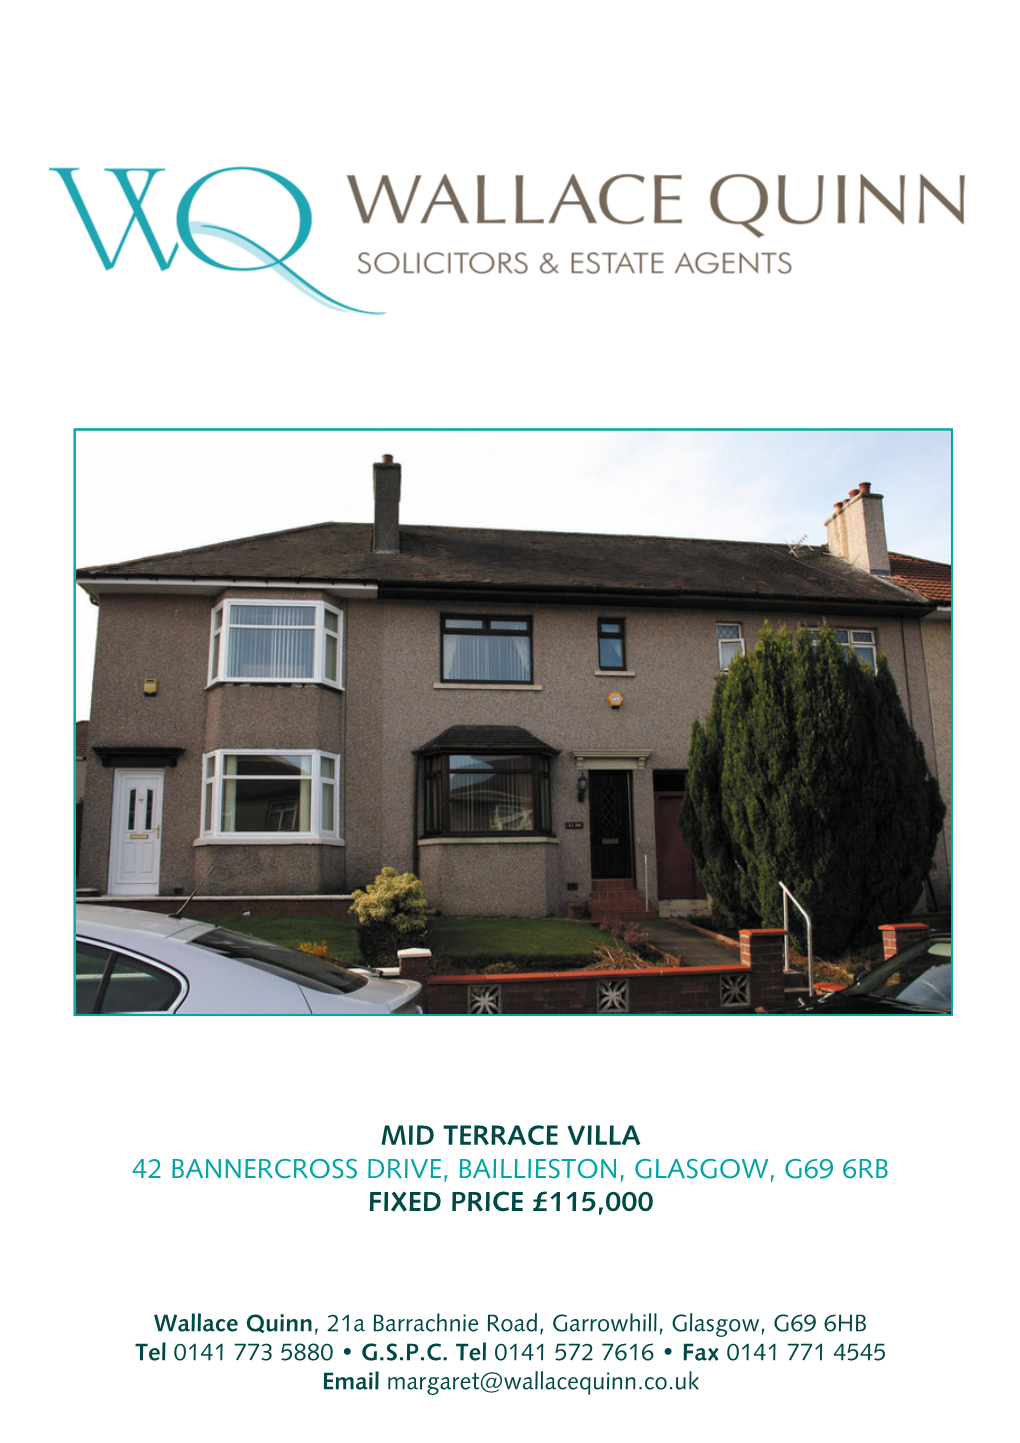 Mid Terrace Villa 42 Bannercross Drive, Baillieston, Glasgow, G69 6Rb Fixed Price £115,000